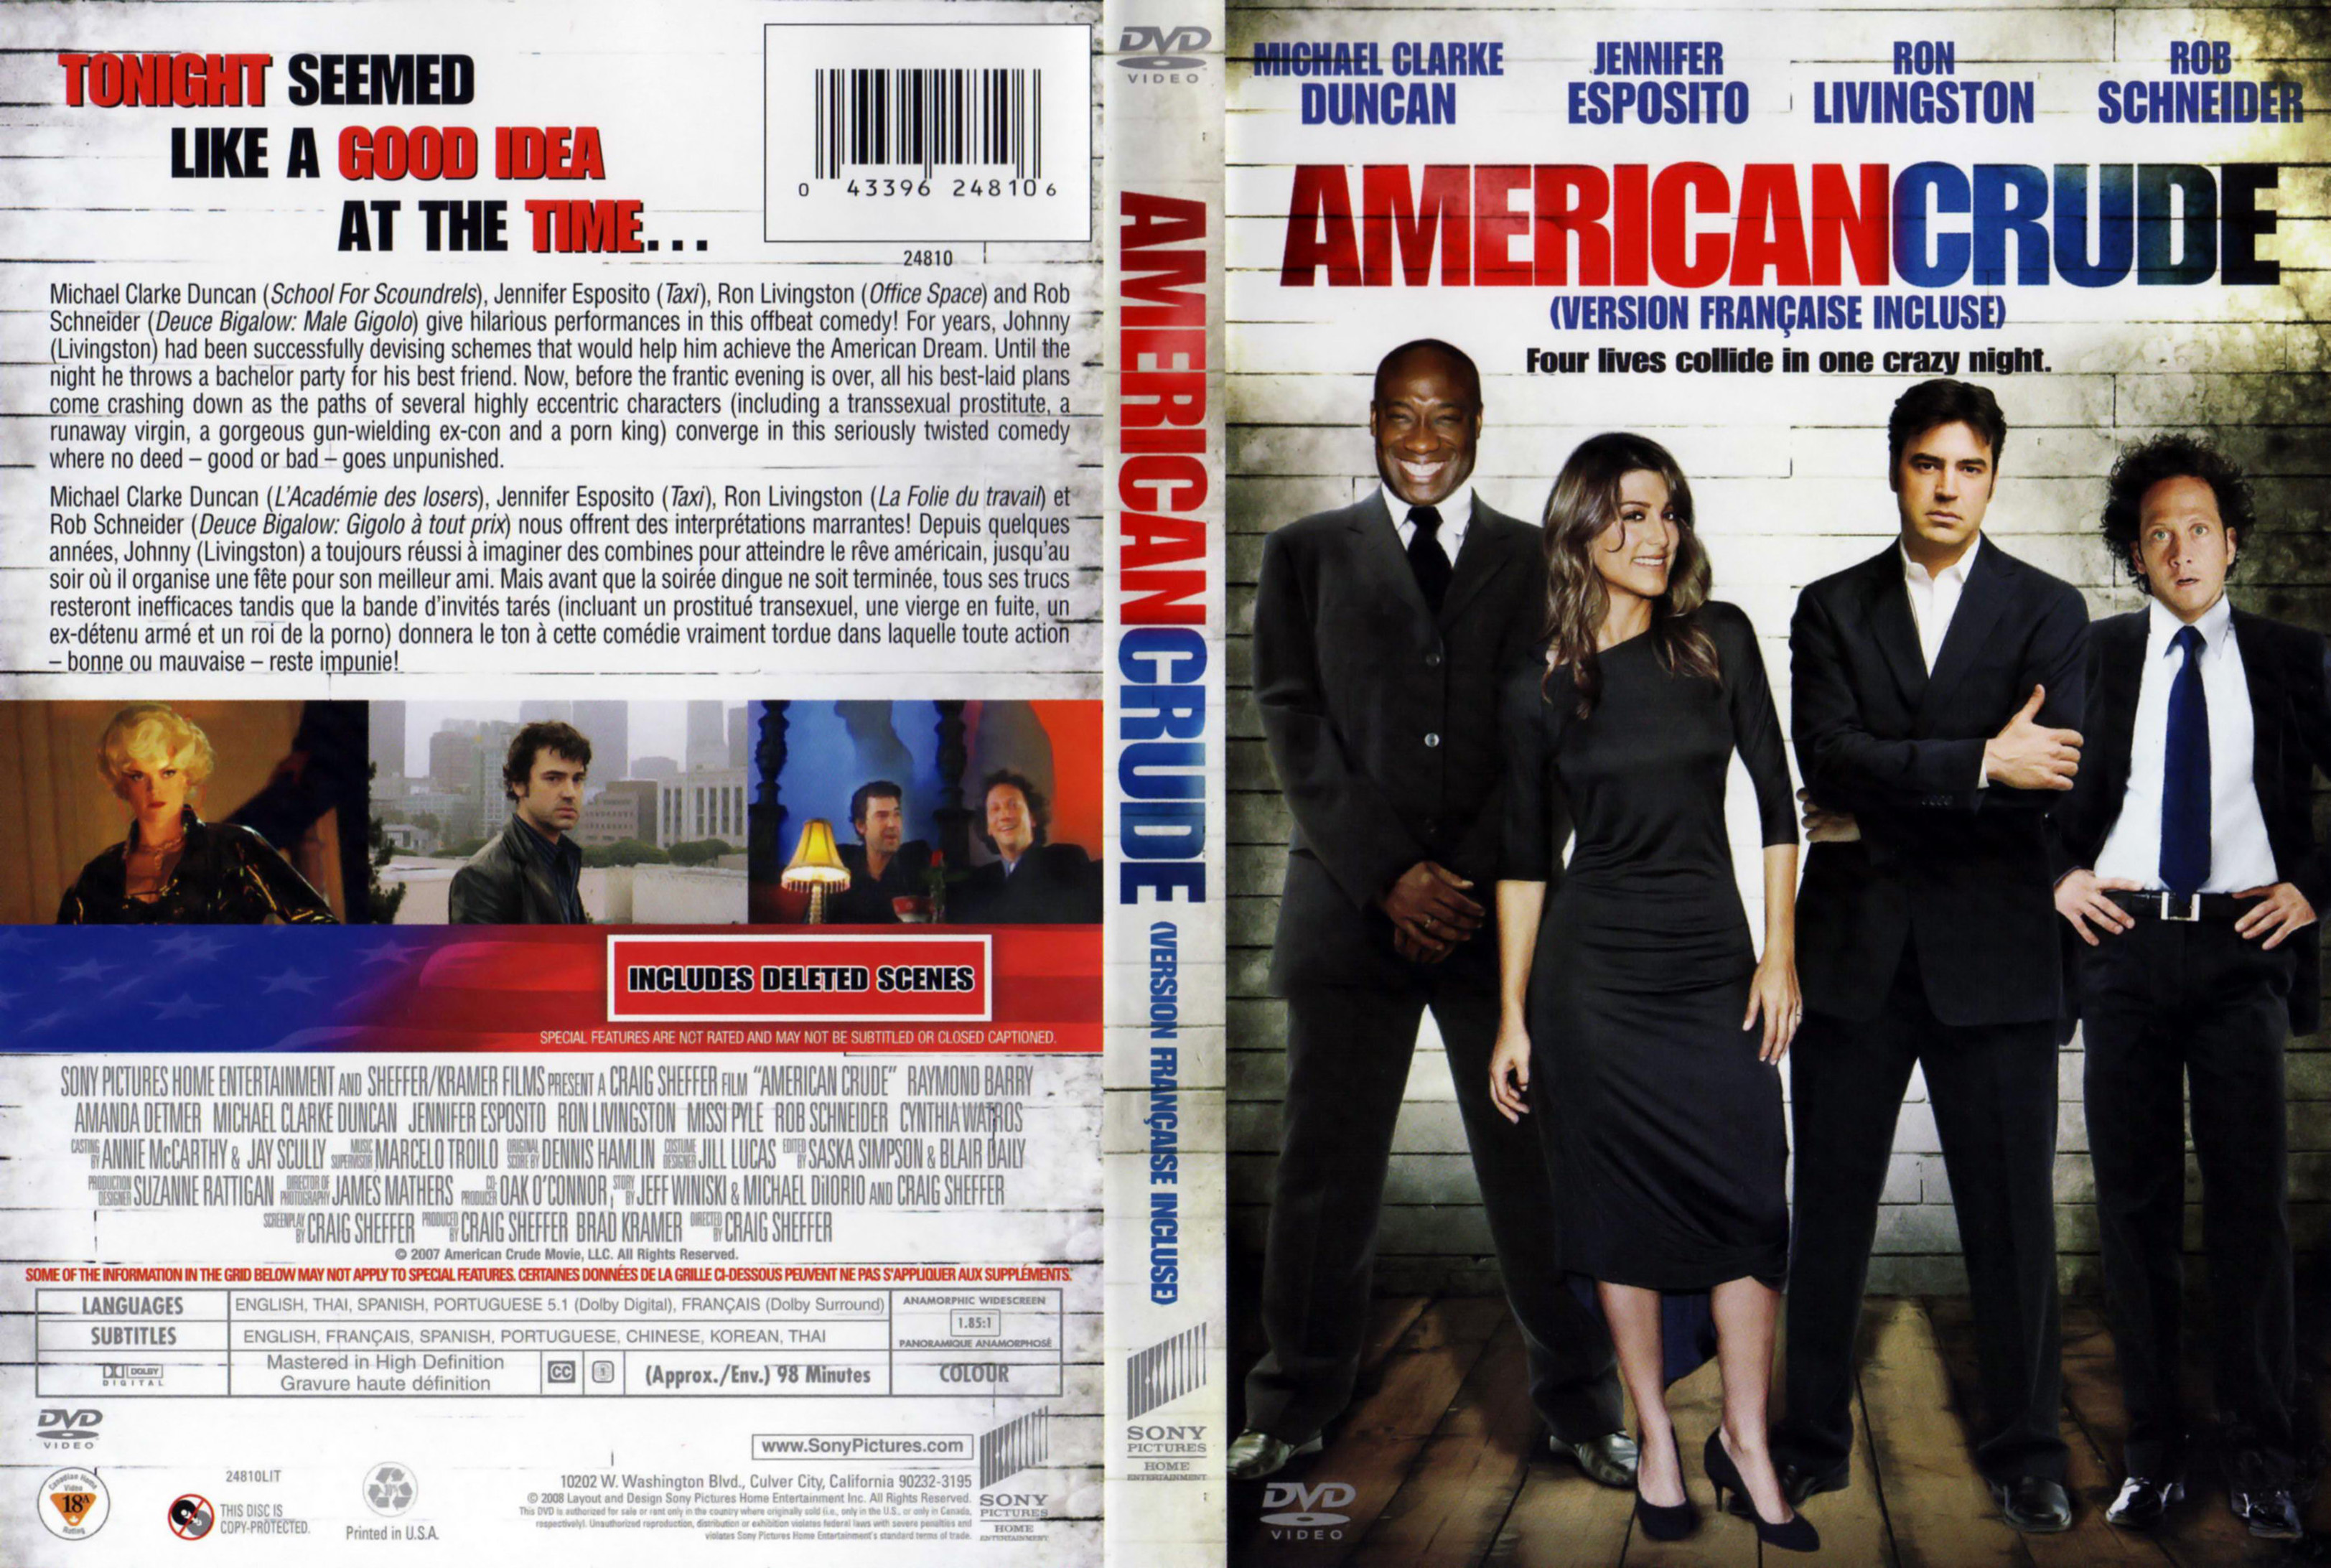 Jaquette DVD American crude v2